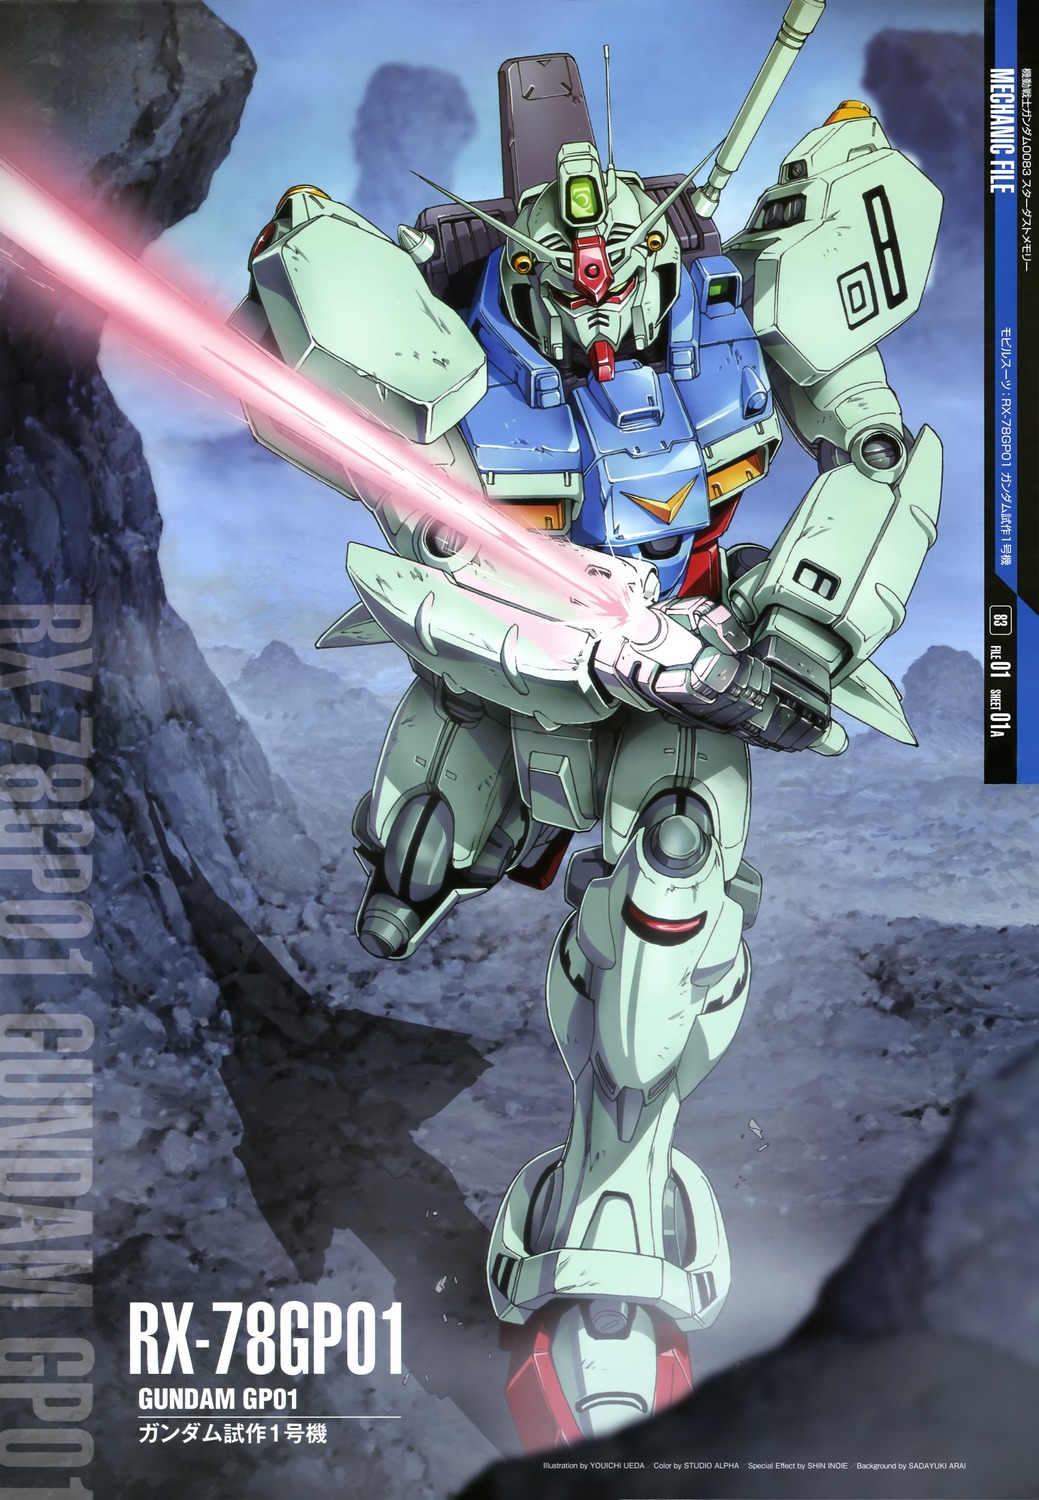 Gundam 00 Quanta Wallpaper posted by John Anderson